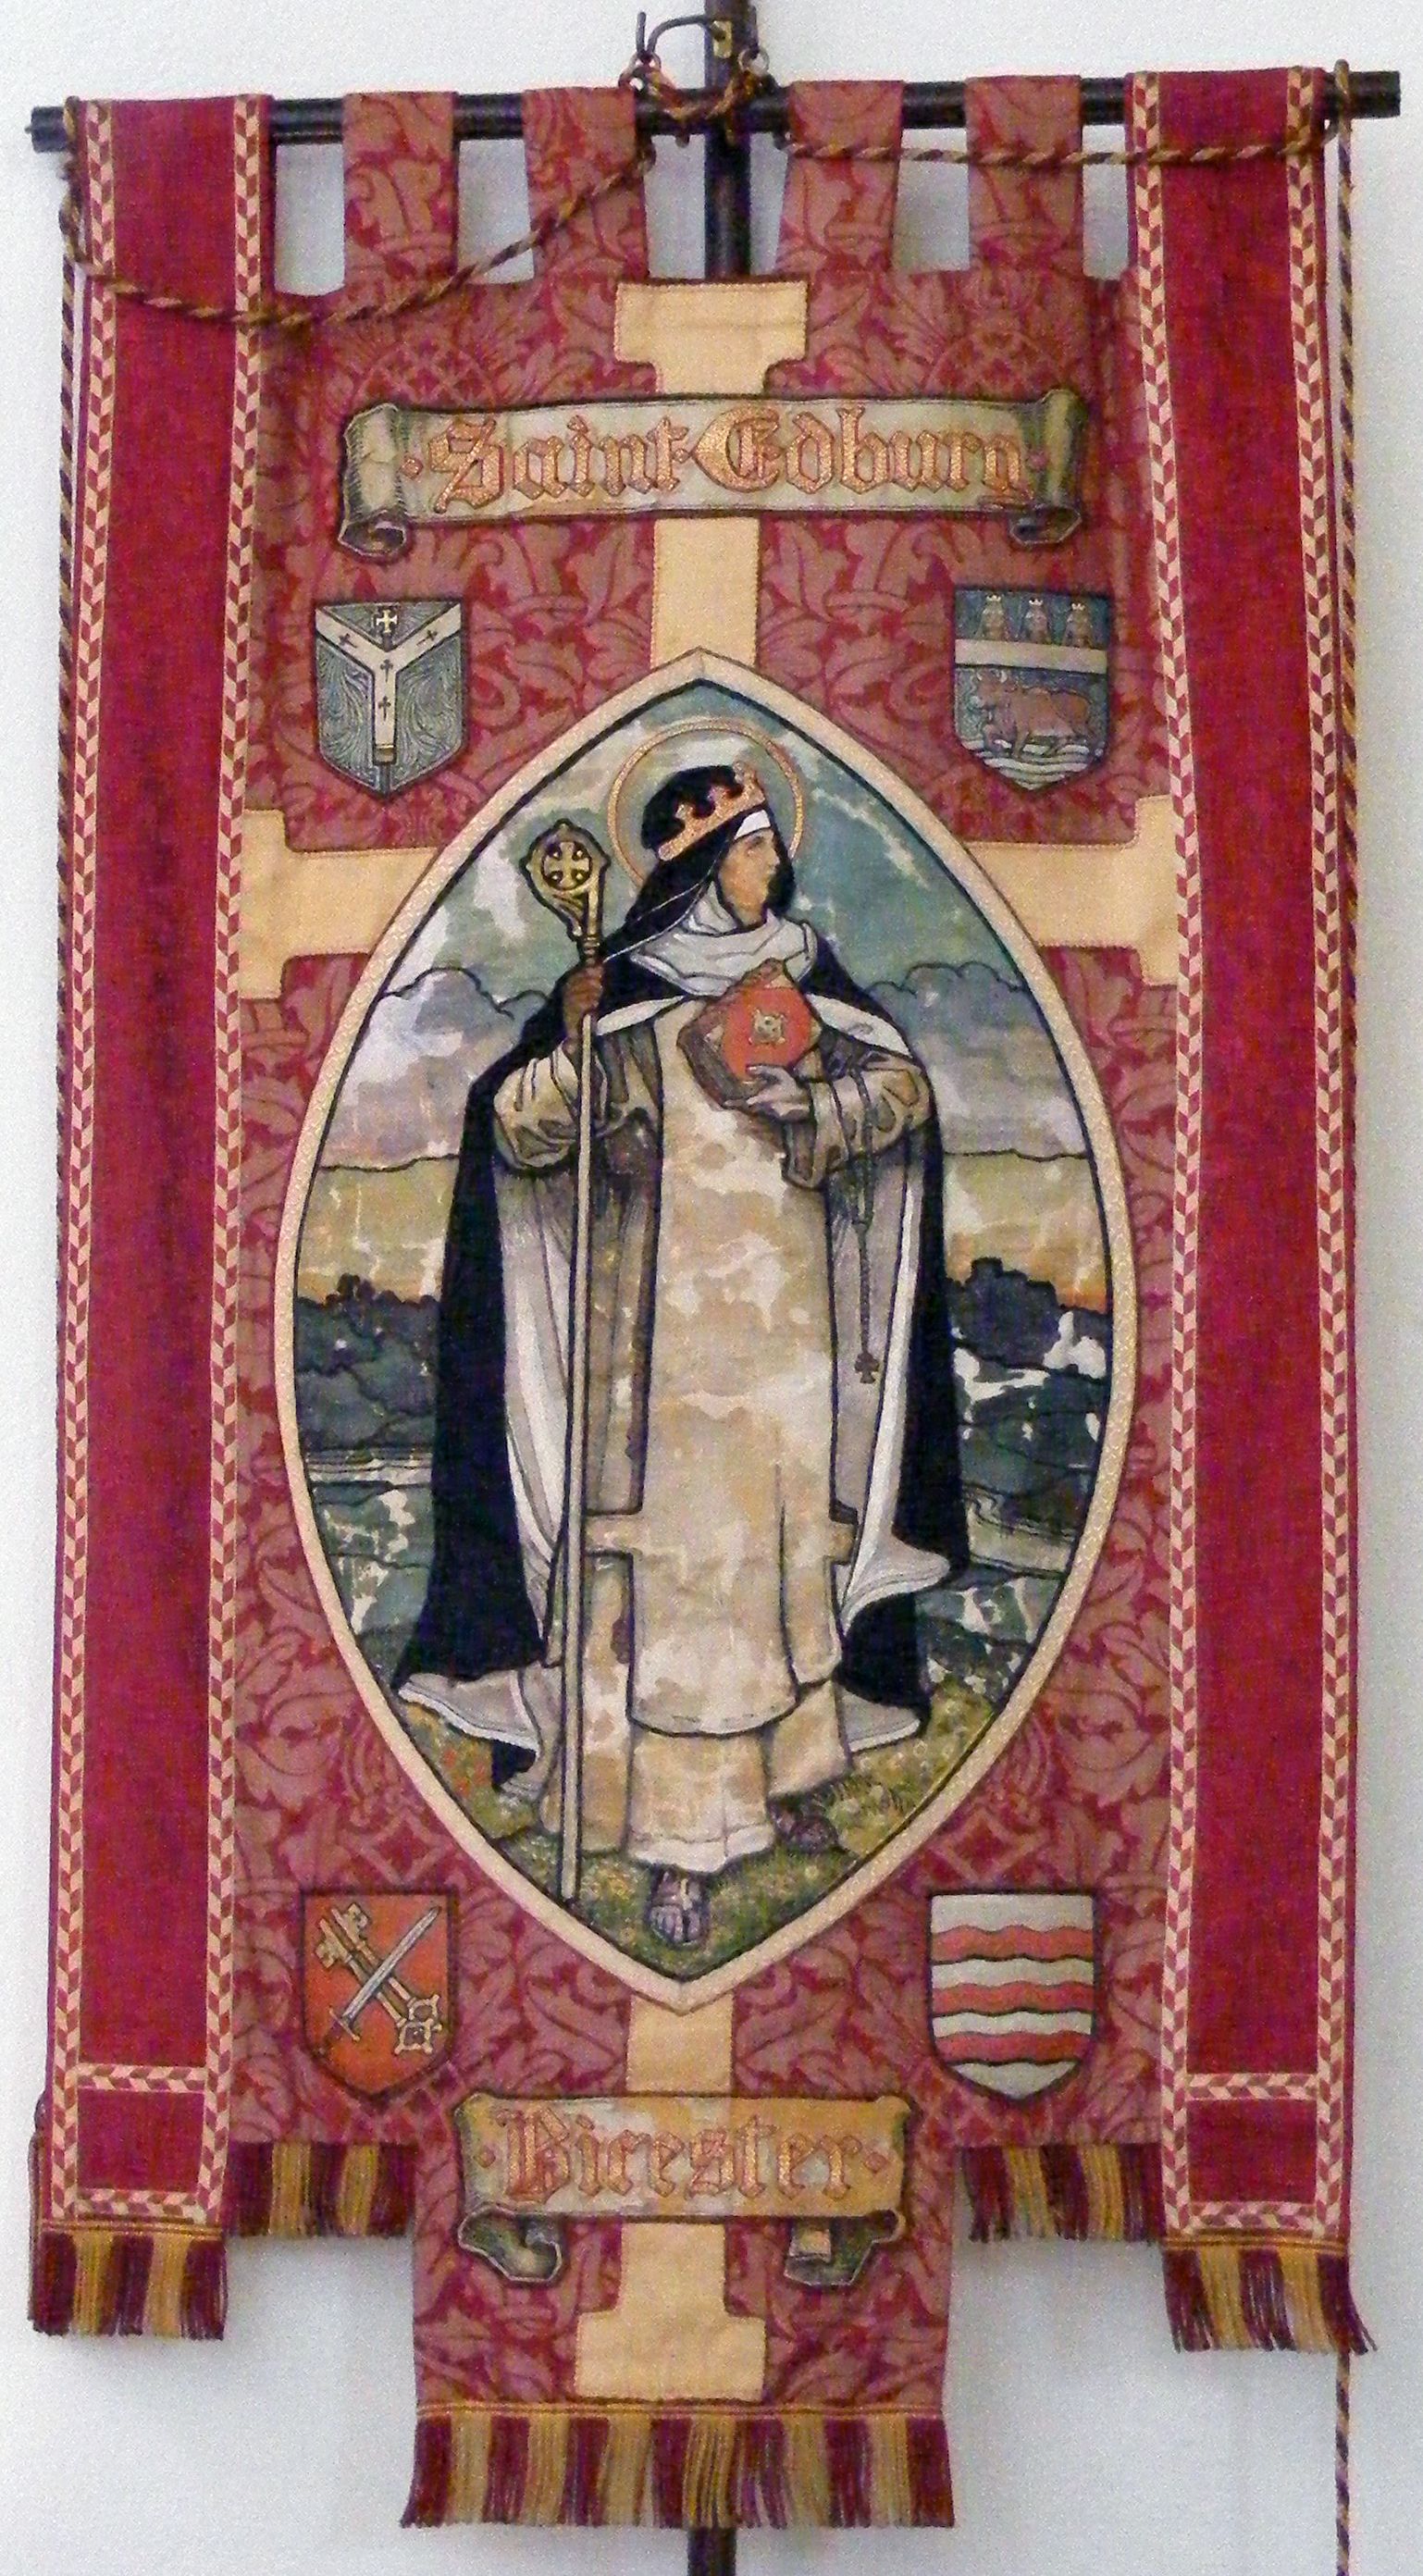 A nineteenth-century banner in St Edburg's Church depicts St Edburg of Winchester.